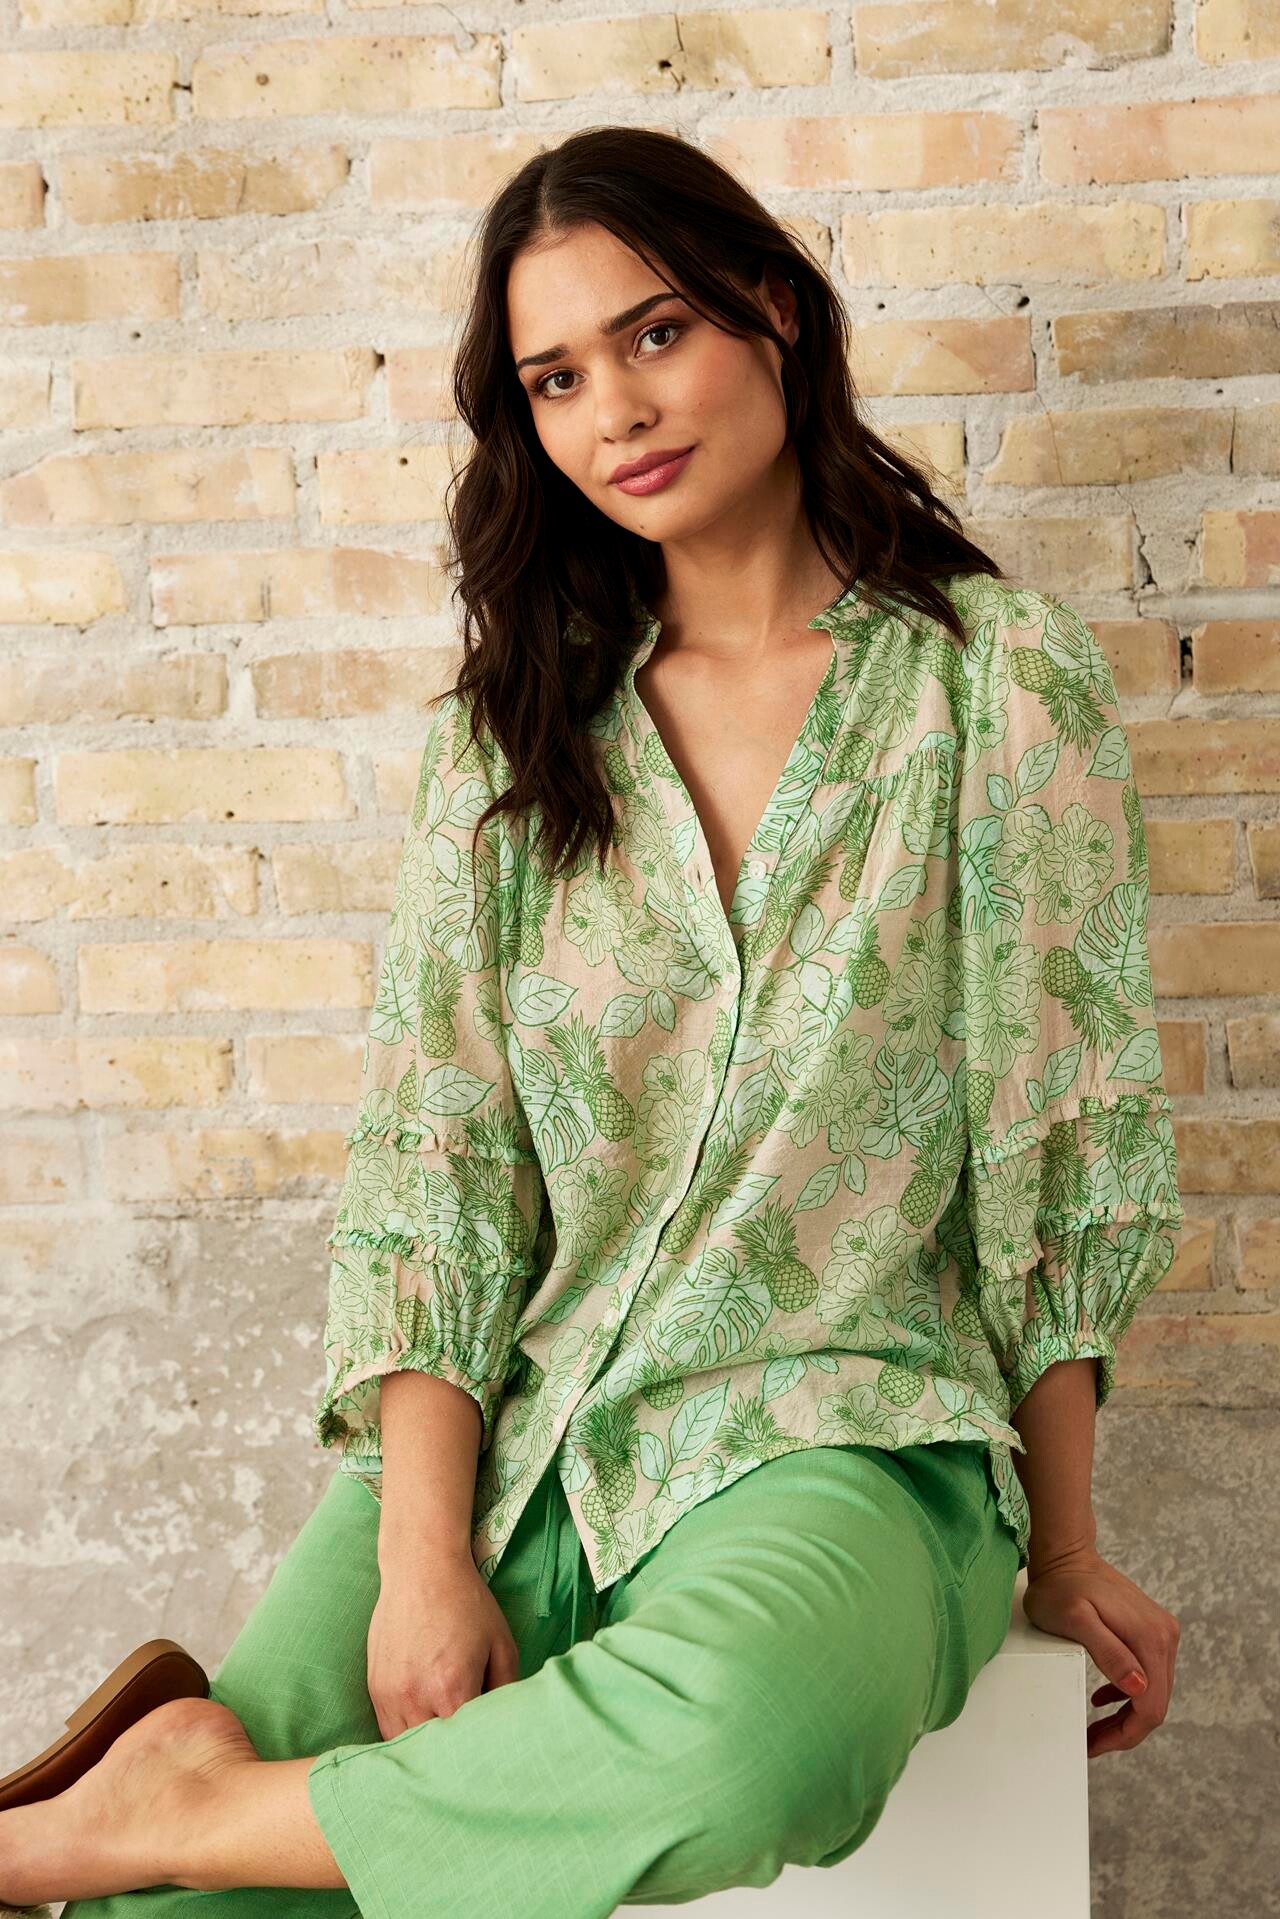 Se IN FRONT Exotic Skjorte, Farve: Green, Størrelse: M, Dame hos Infront Women